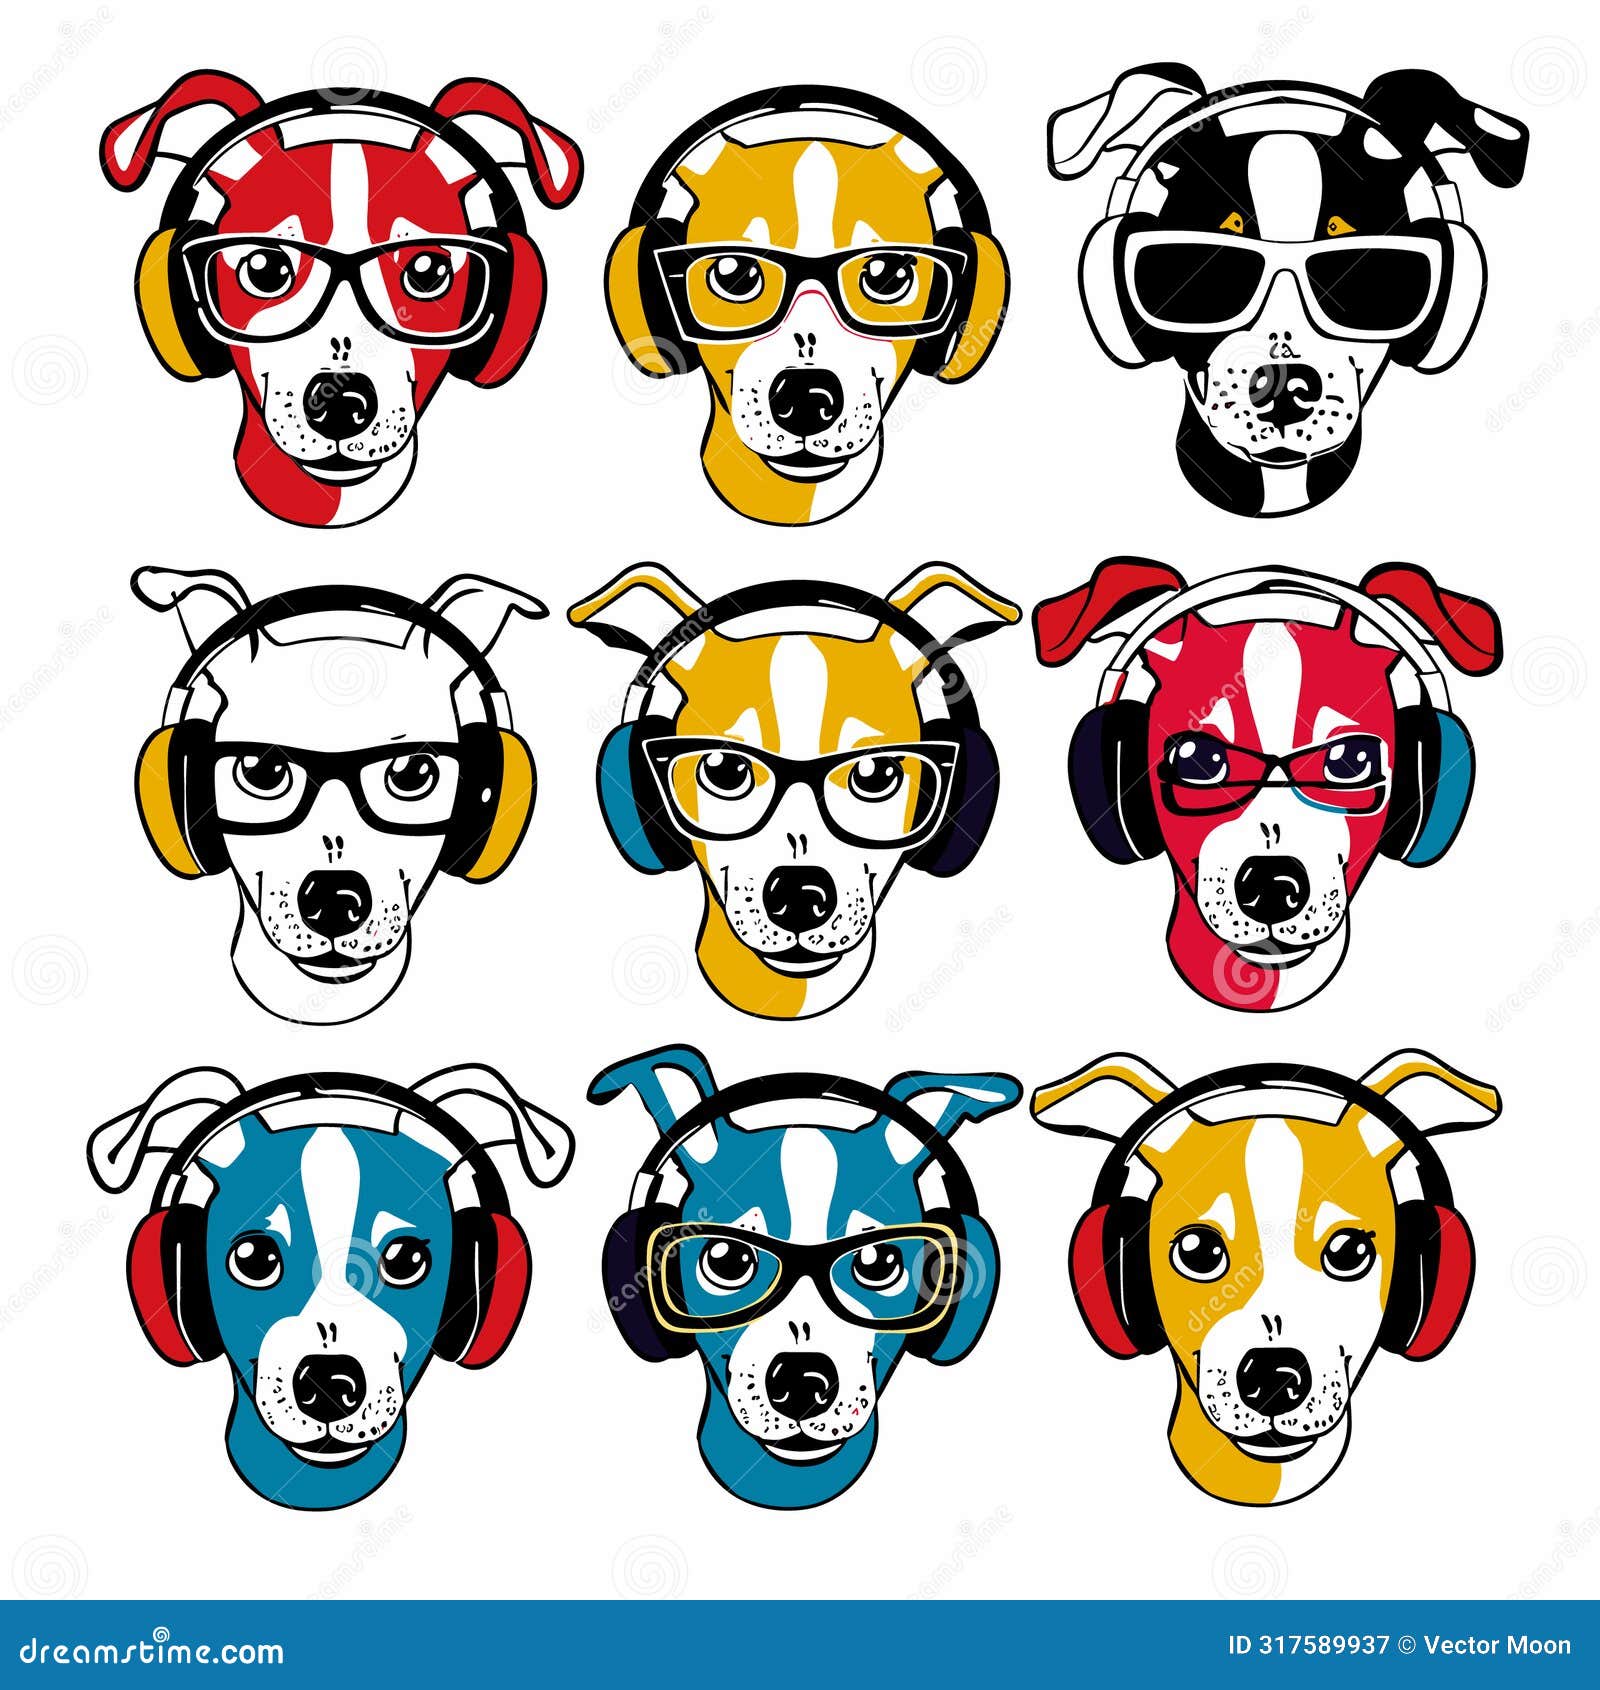 nine stylized cartoon dogs wearing various headgear glasses, sunglasses, headphones, dog displays